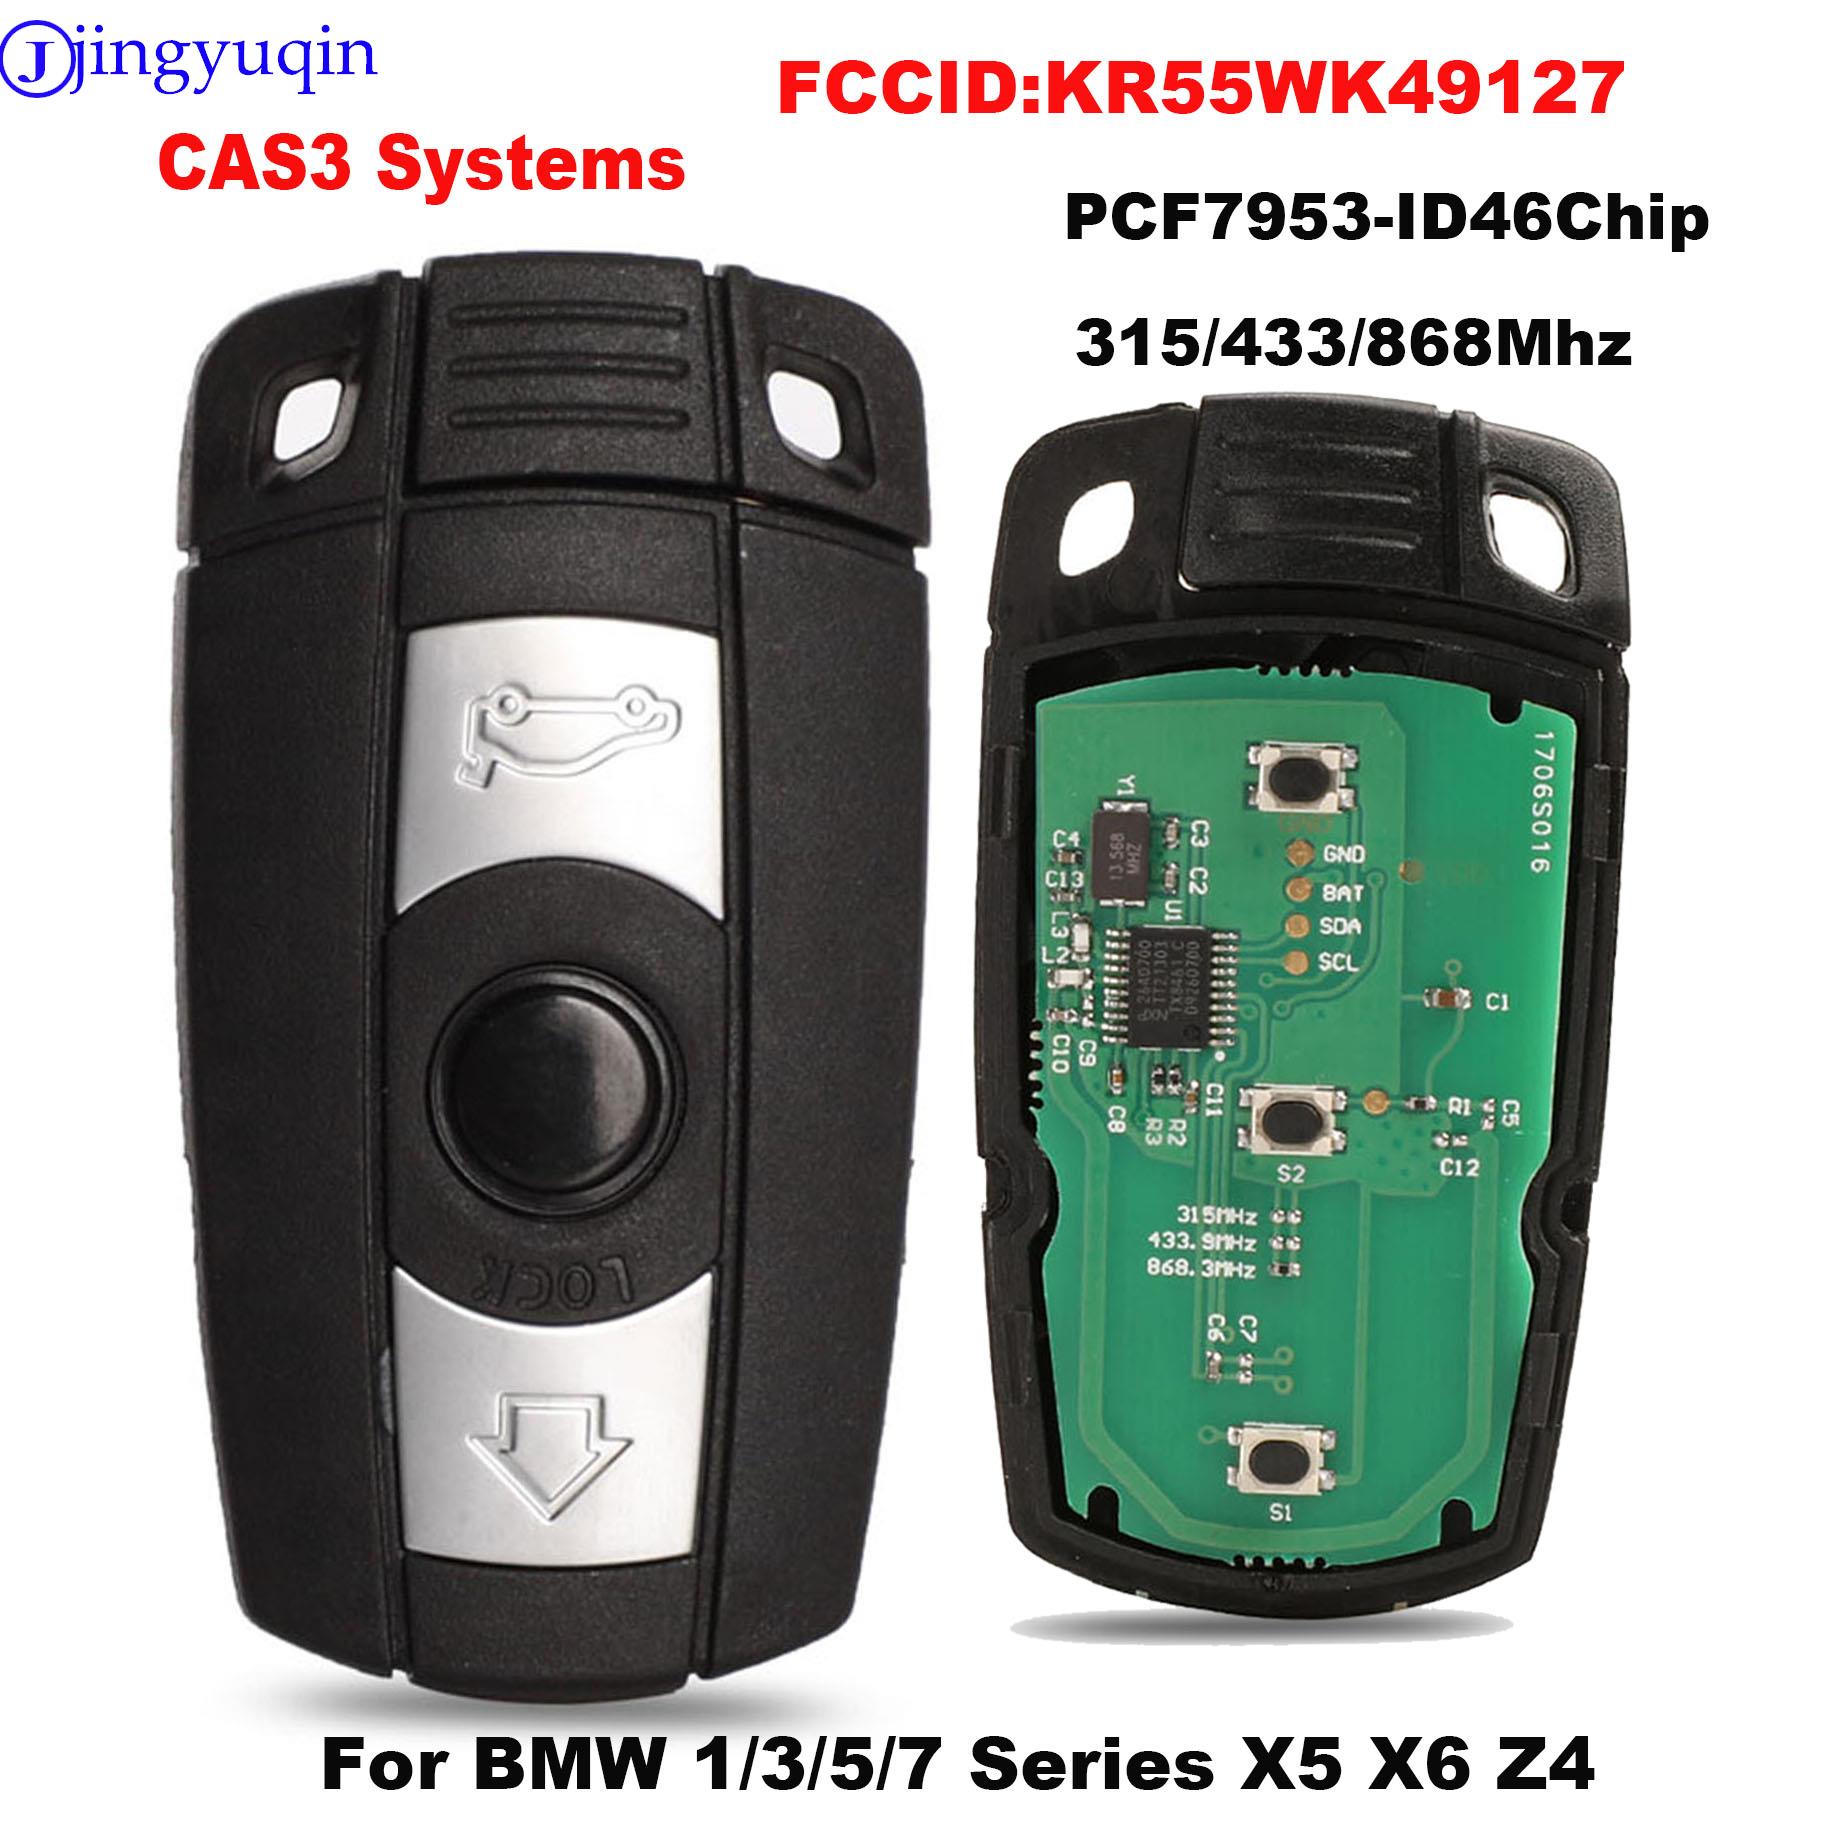 jingyuqin 315 433 868Mhz Car Remote Smart Key For BMW 1 3 5 7 Series X5 X6